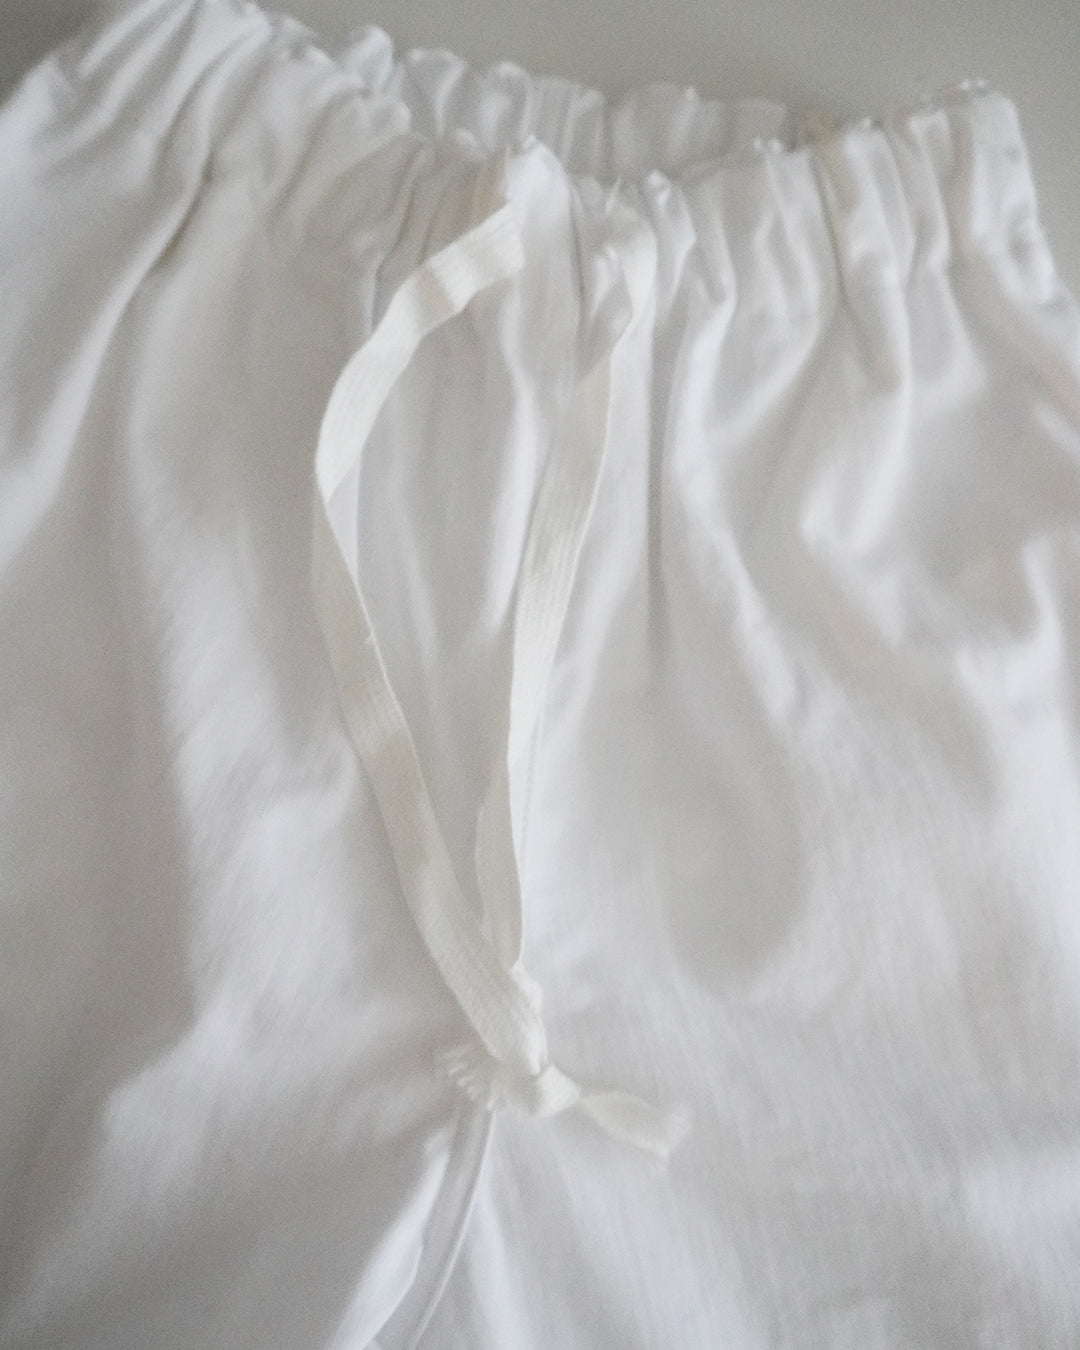 TUKI gum pants / white / solid twill / size1,2